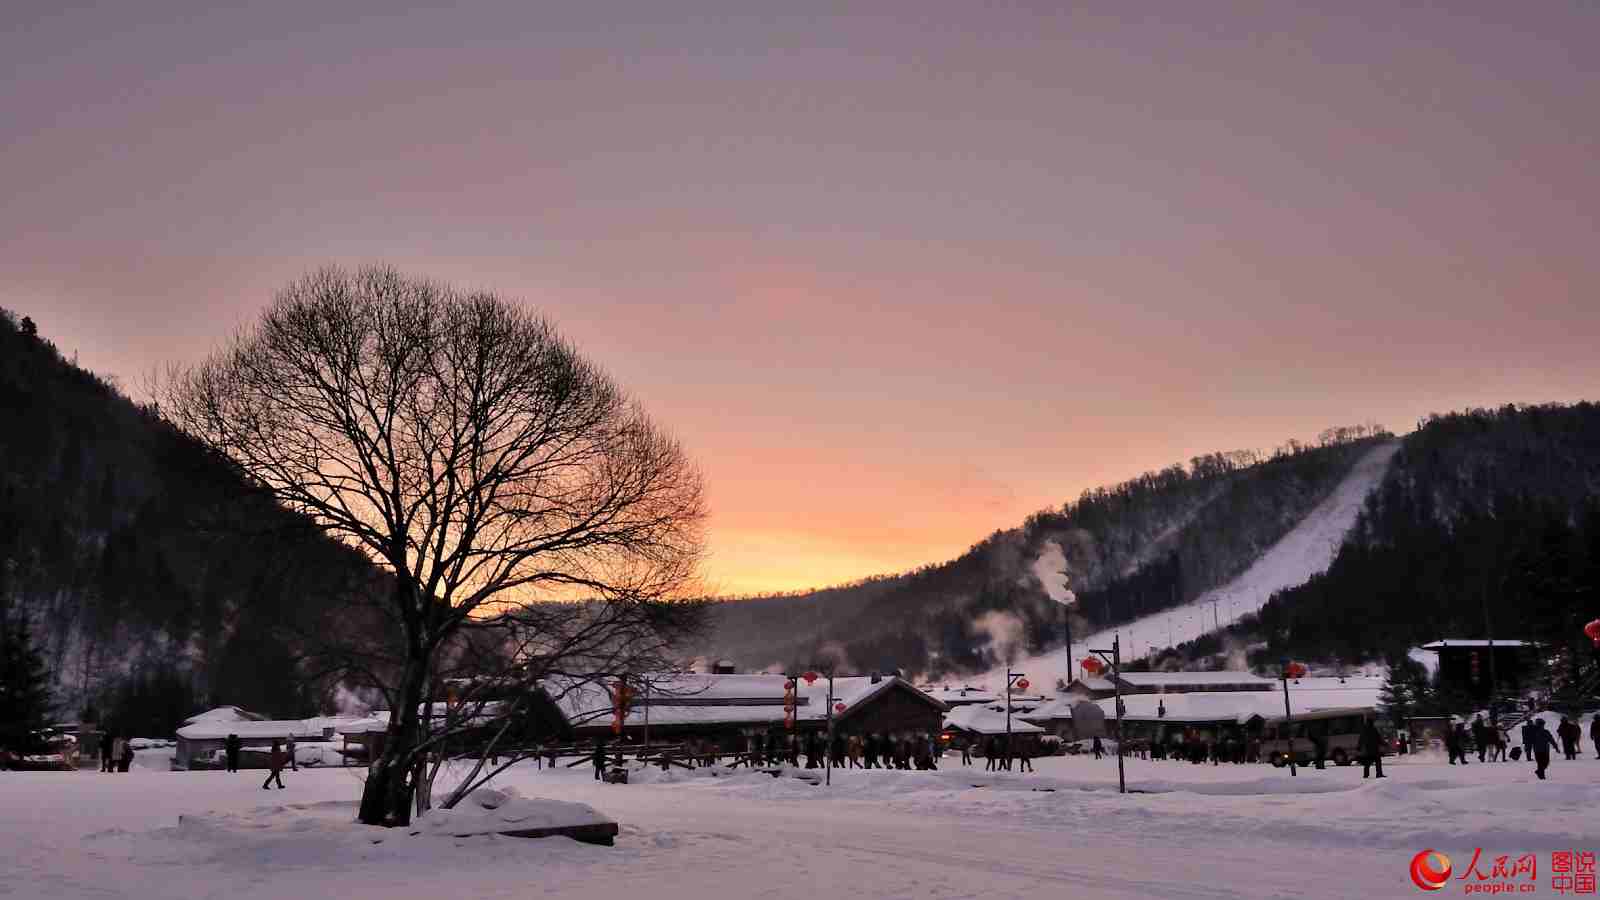 Snowy Xuexiang Village